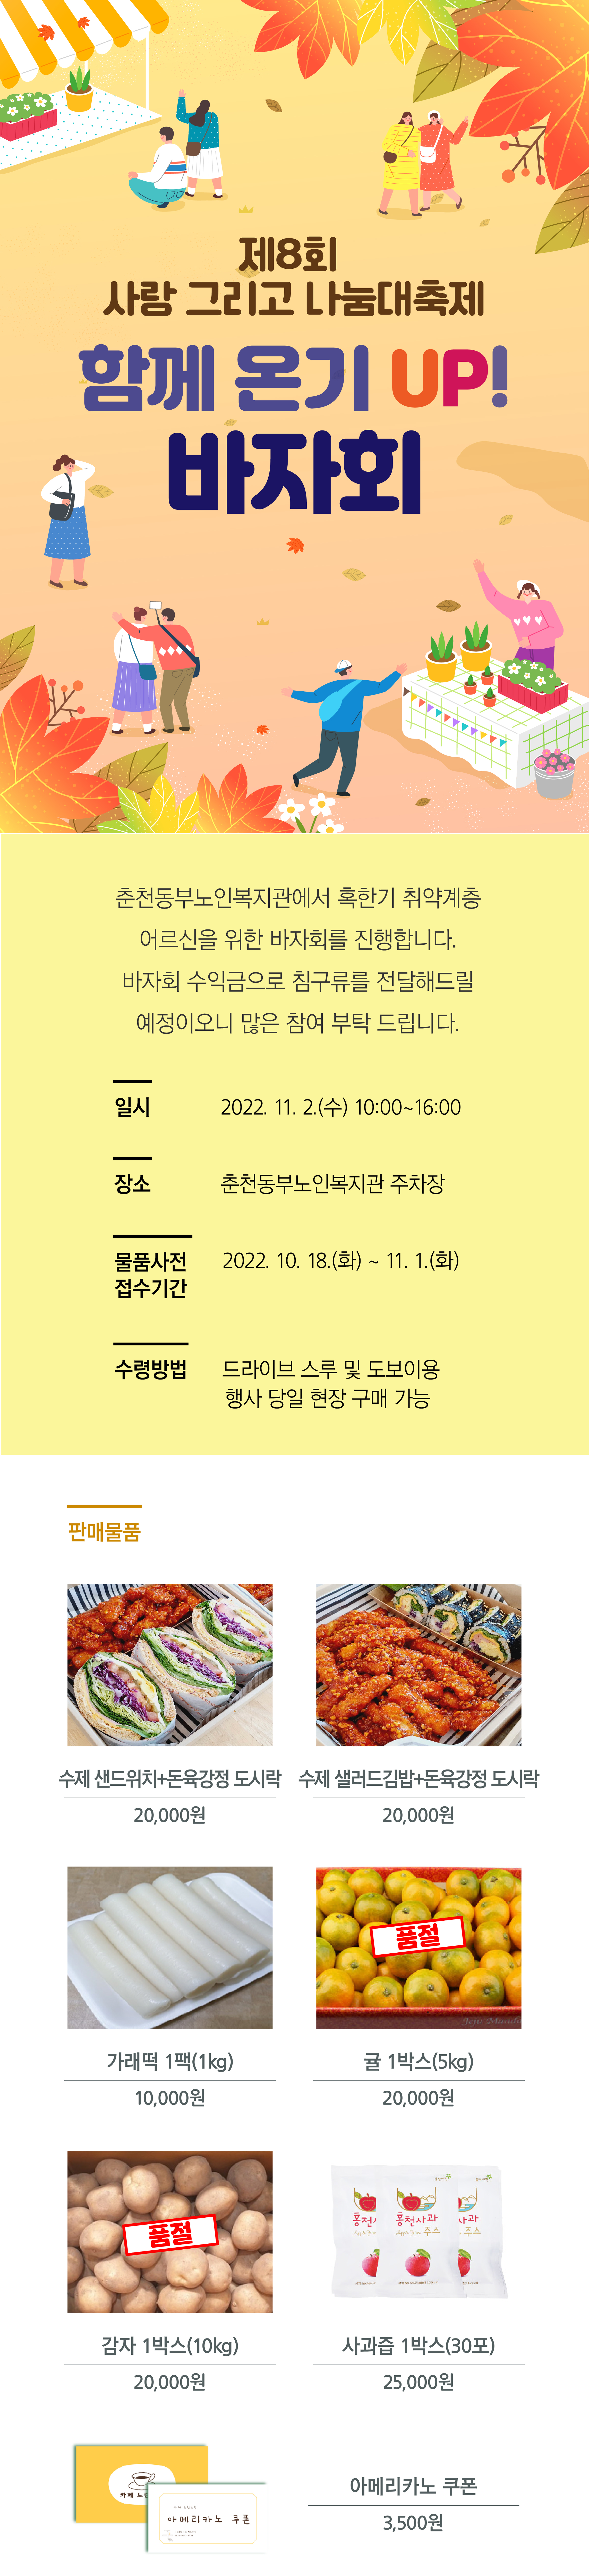 2022-Chuncheon-content-1.jpg